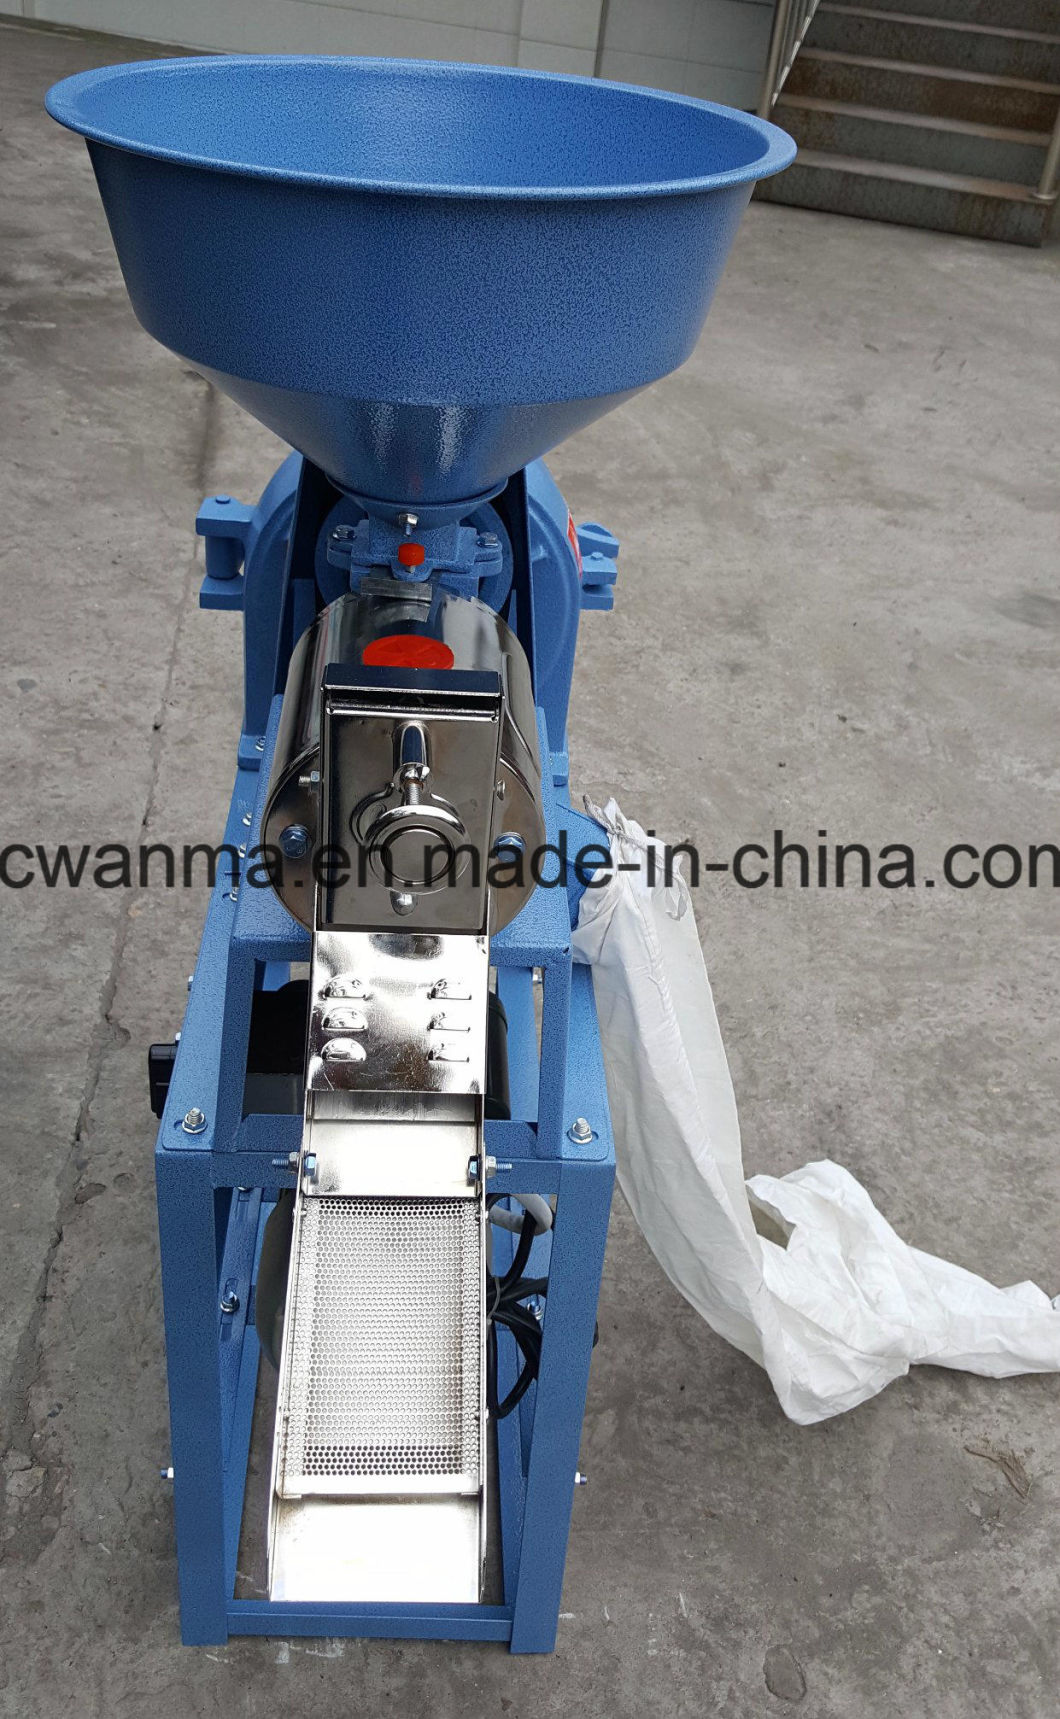 Wanma93 Combined Auto Rice Milling and Polishing Machine